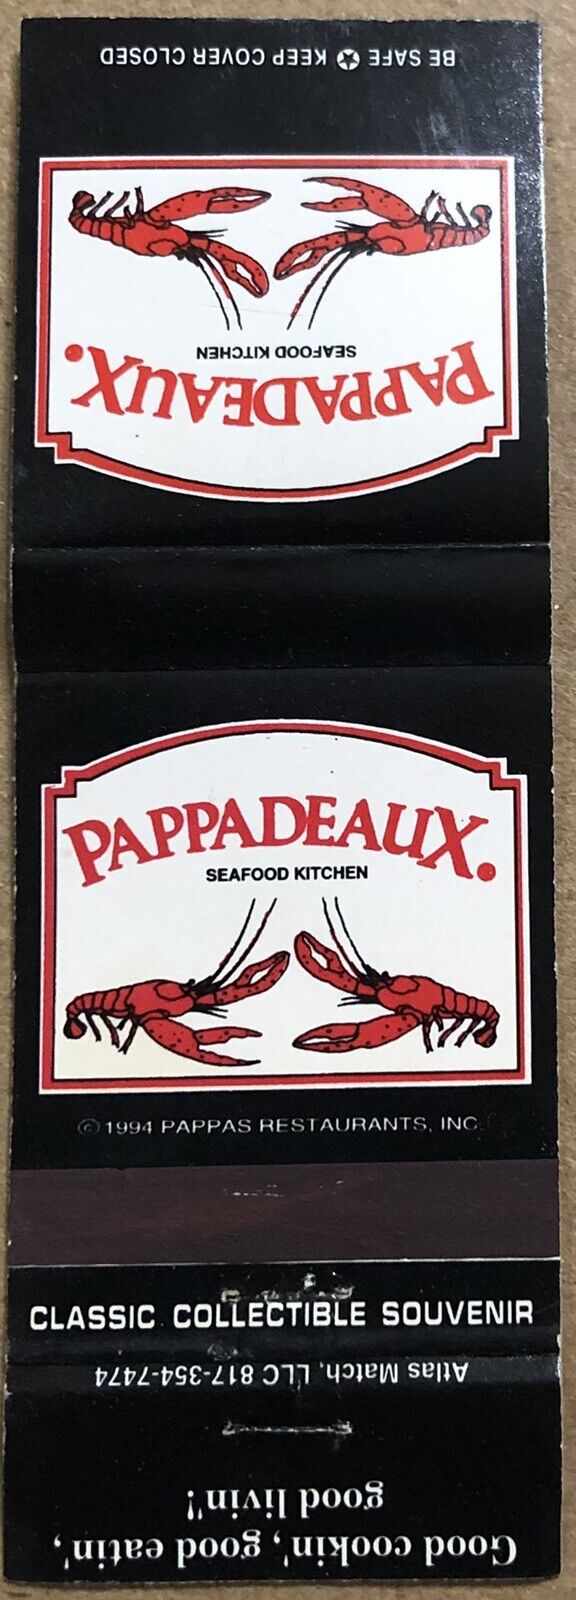 Vintage 20 Strike Matchbook Cover - Pappadeaux Seafood Kitchen